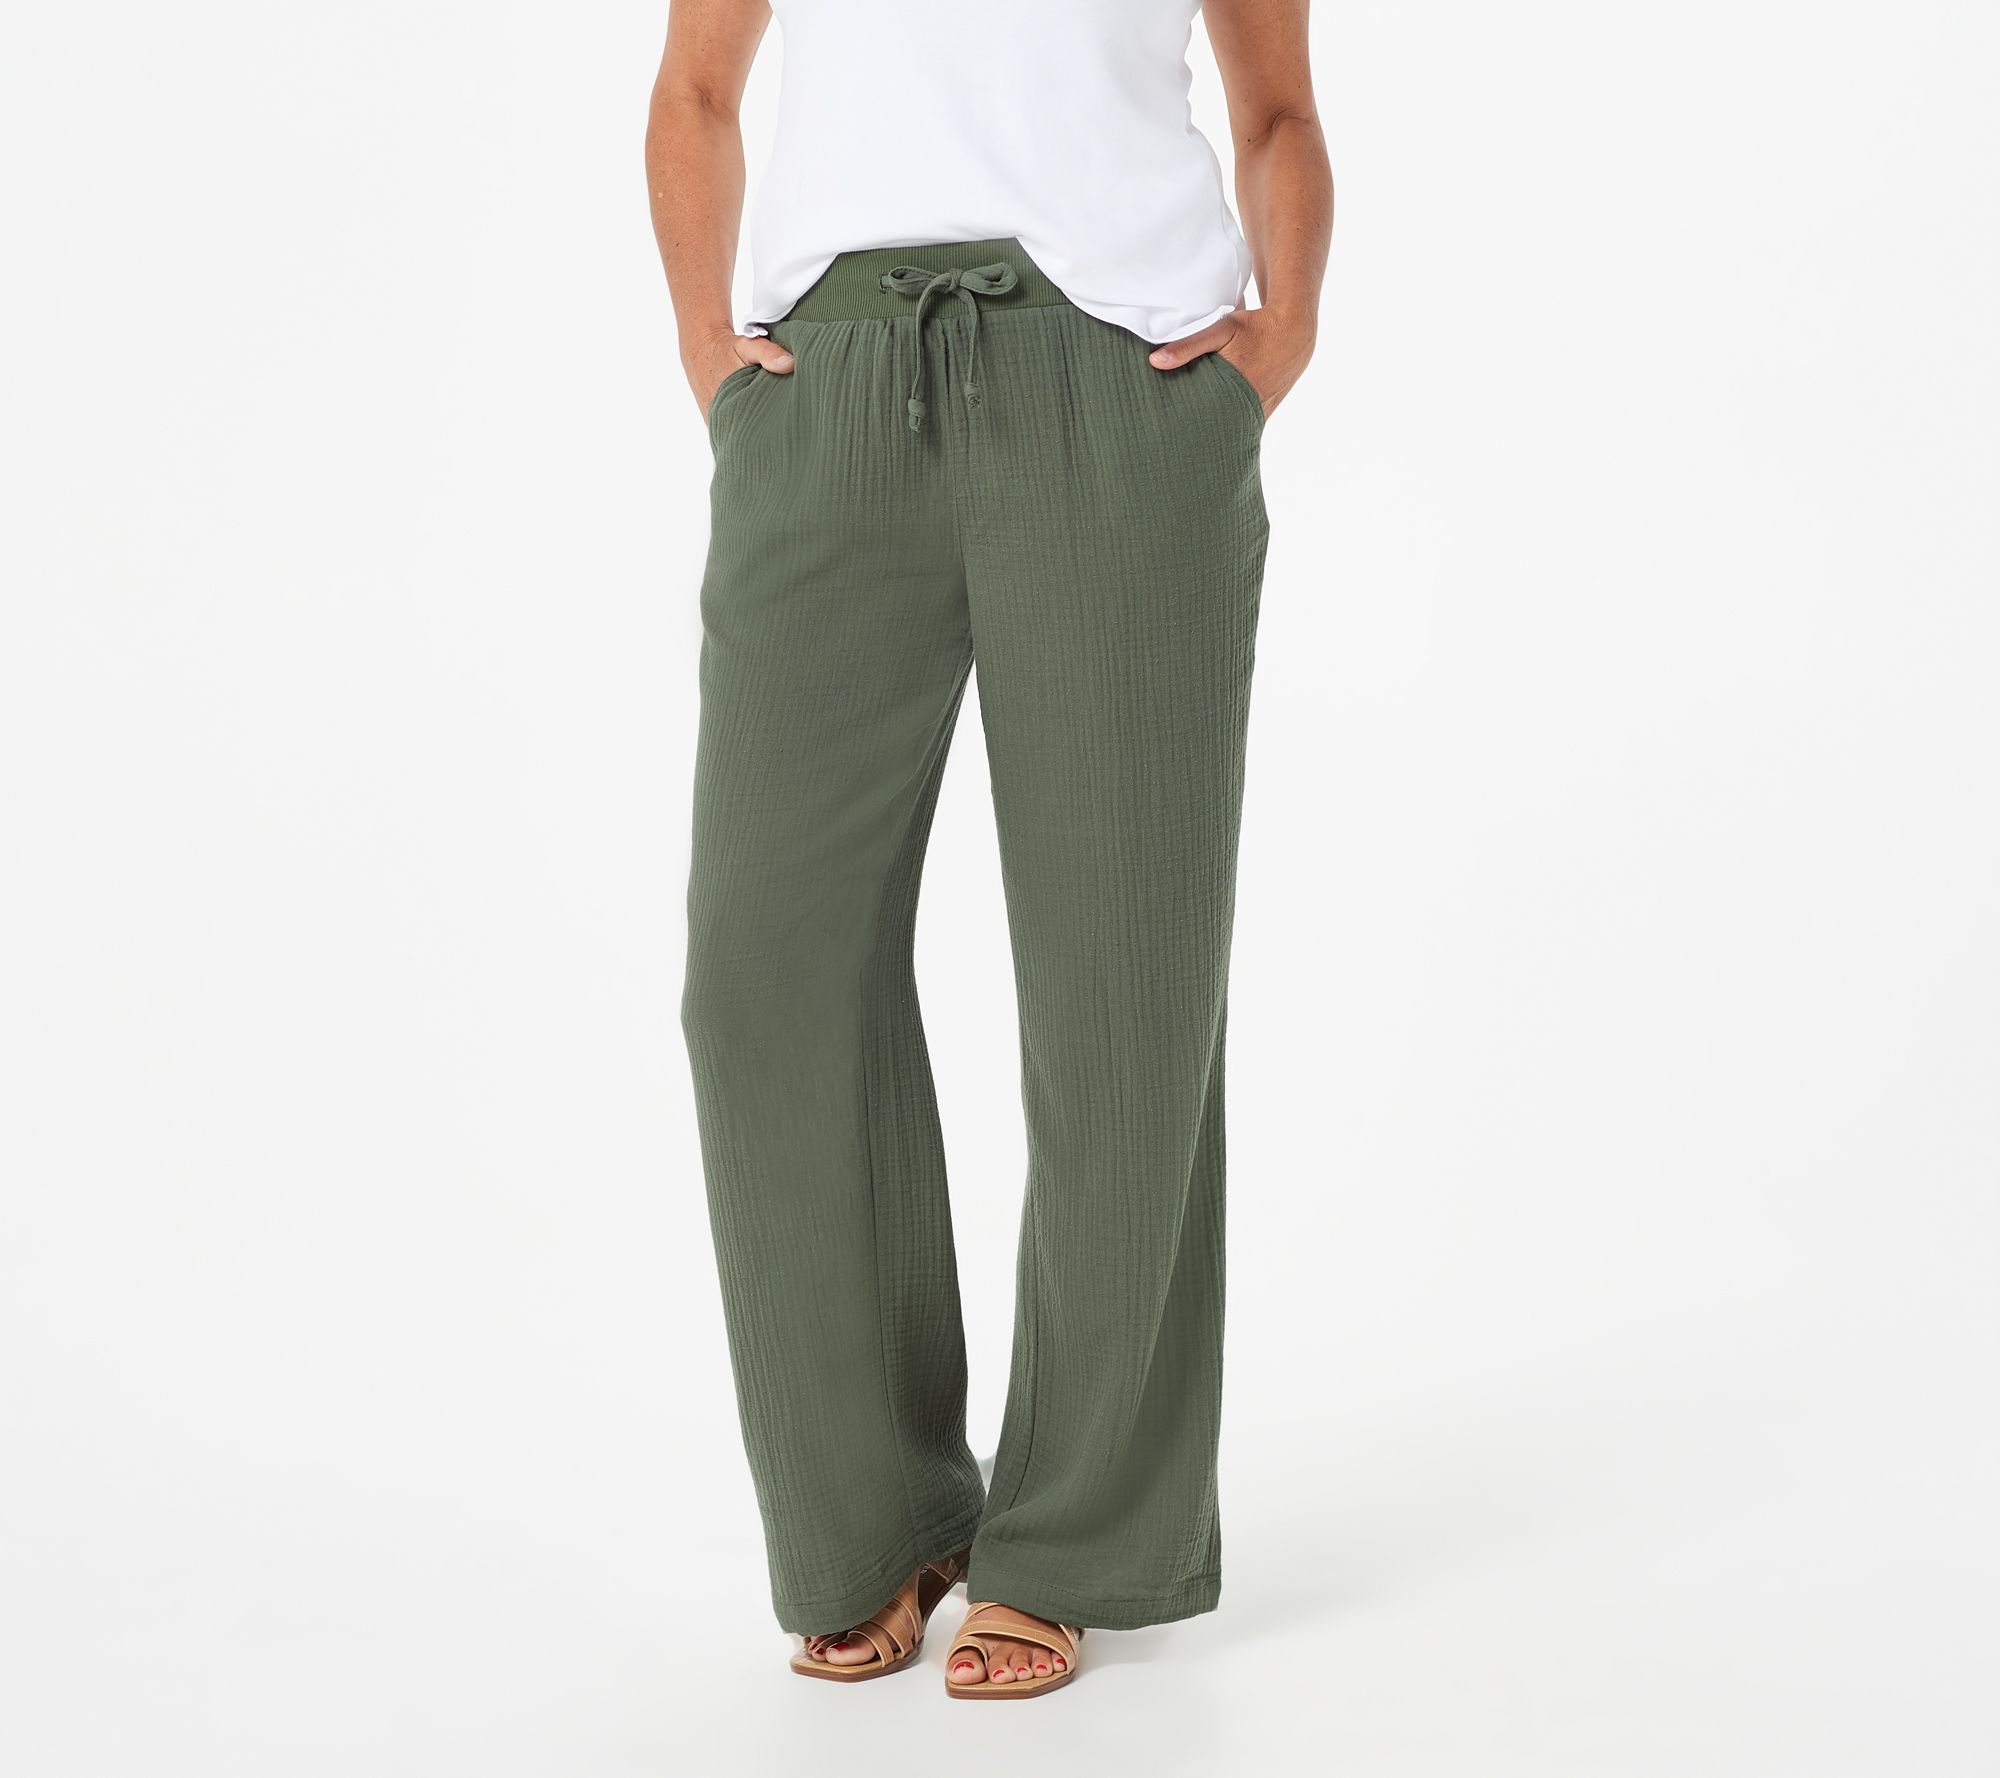 Denim & Co. Naturals Crinkle Gauze Pants with Pockets - QVC.com